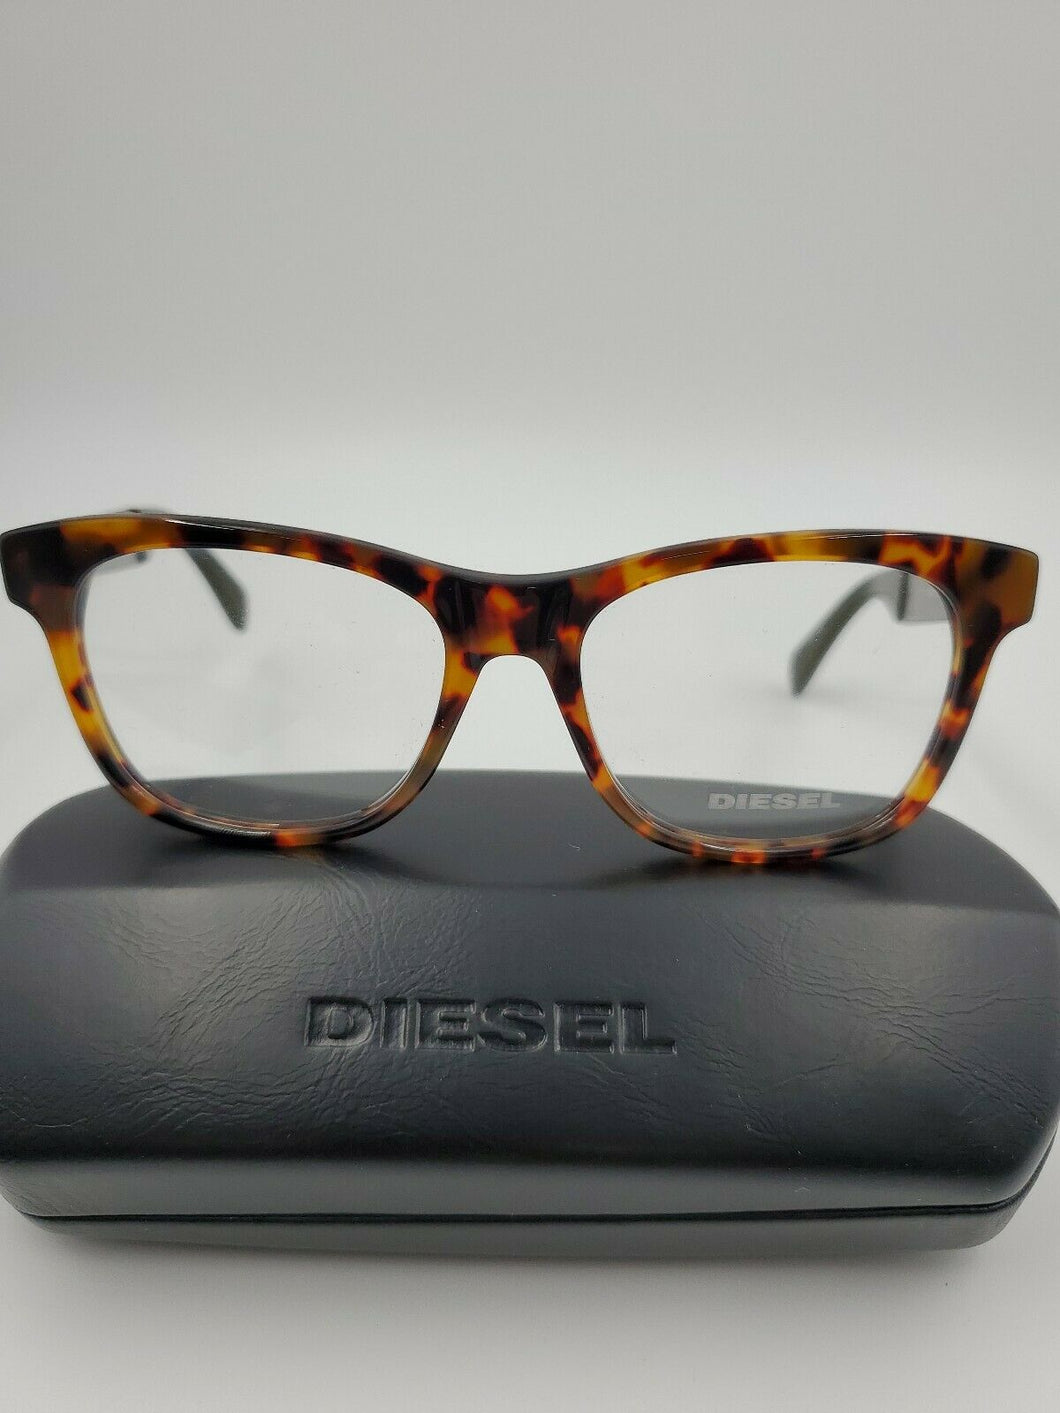 NEW DIESEL Unisex Eyeglasses DL5078 COL. 052 TORTOISE 52-16-145 RX FRAMES